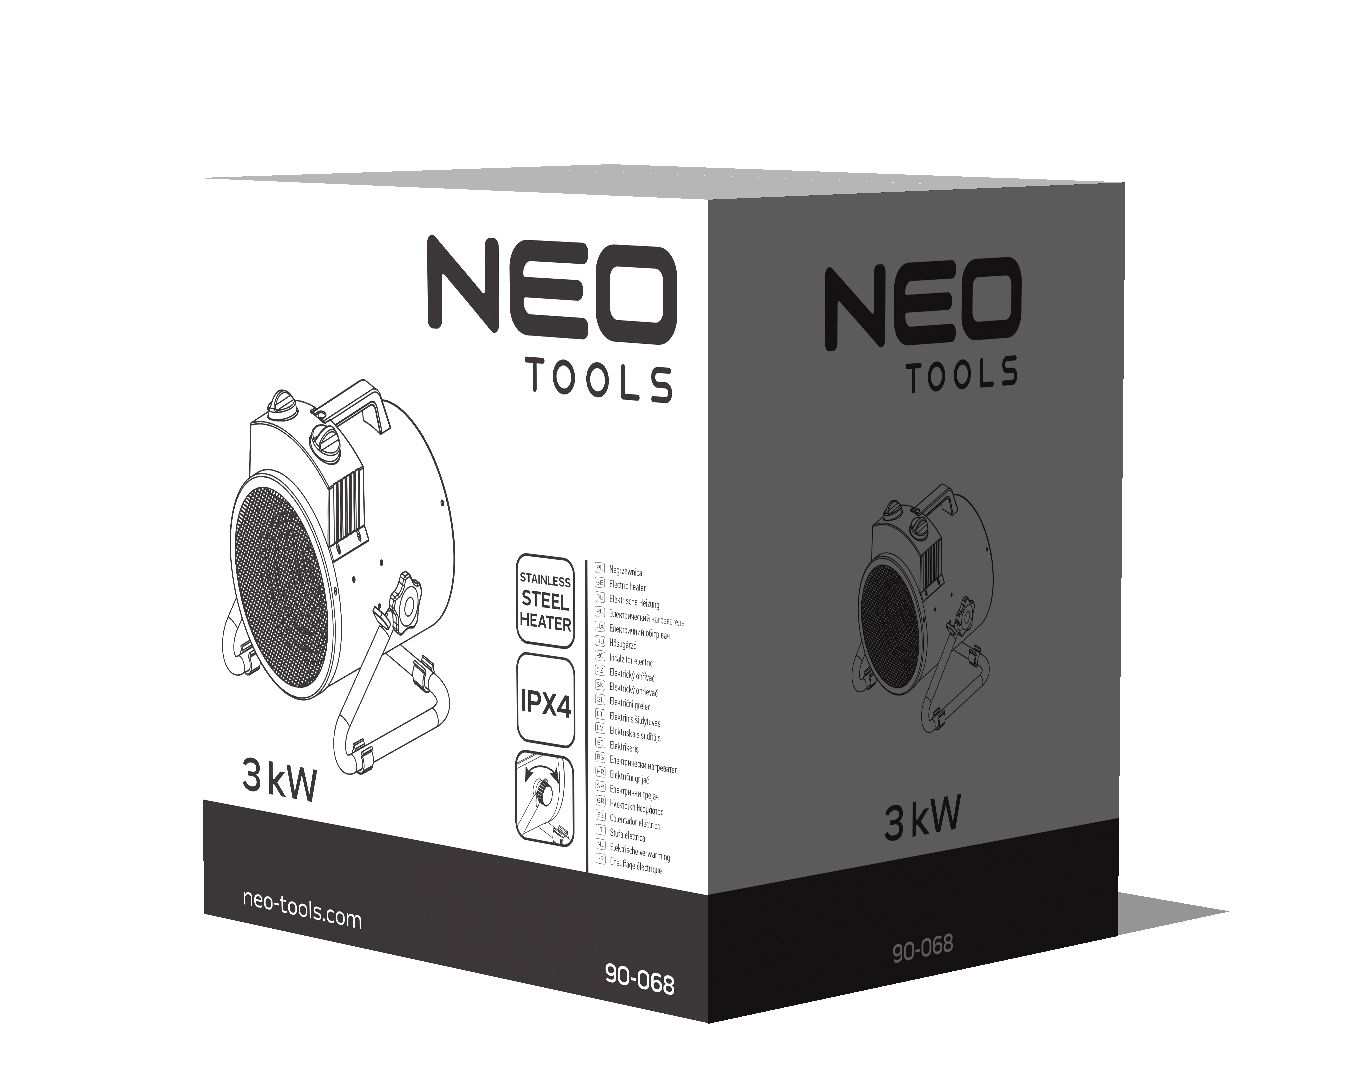 Теплова гармата Neo Tools 90-068 характеристики - фотографія 7